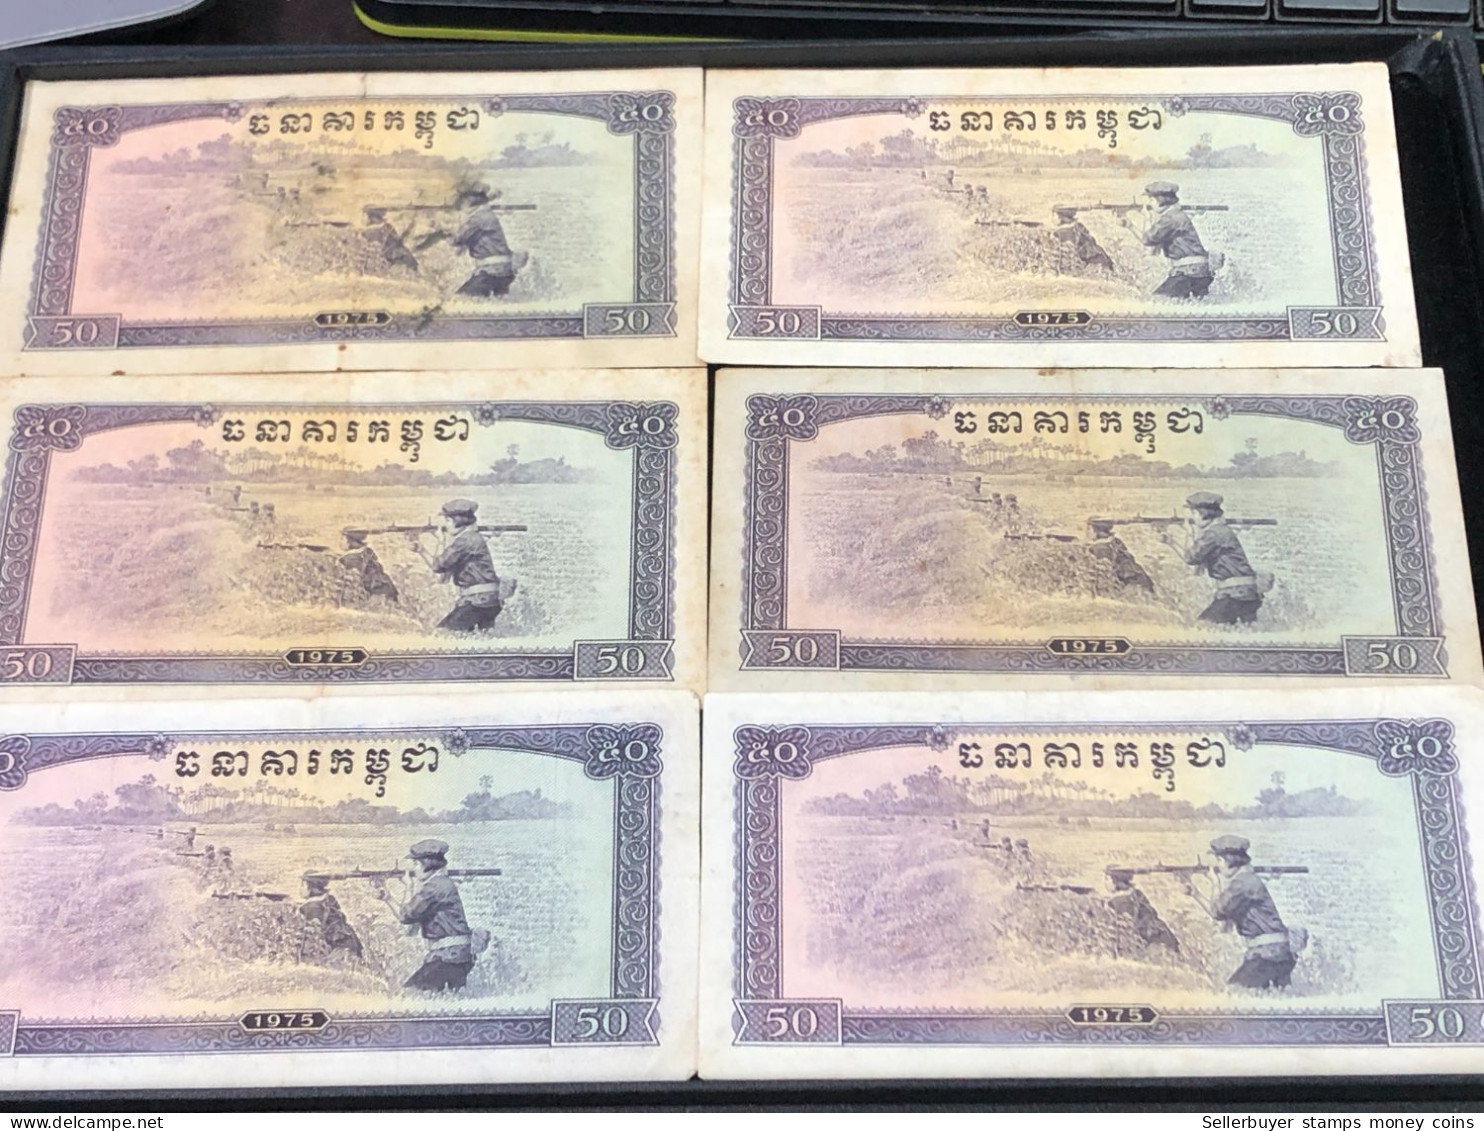 Cambodia Democratic Kampuchea Banknotes #29-/50 Riels 1975- Khome 6 Pcs Xf Very Rare - Cambodia